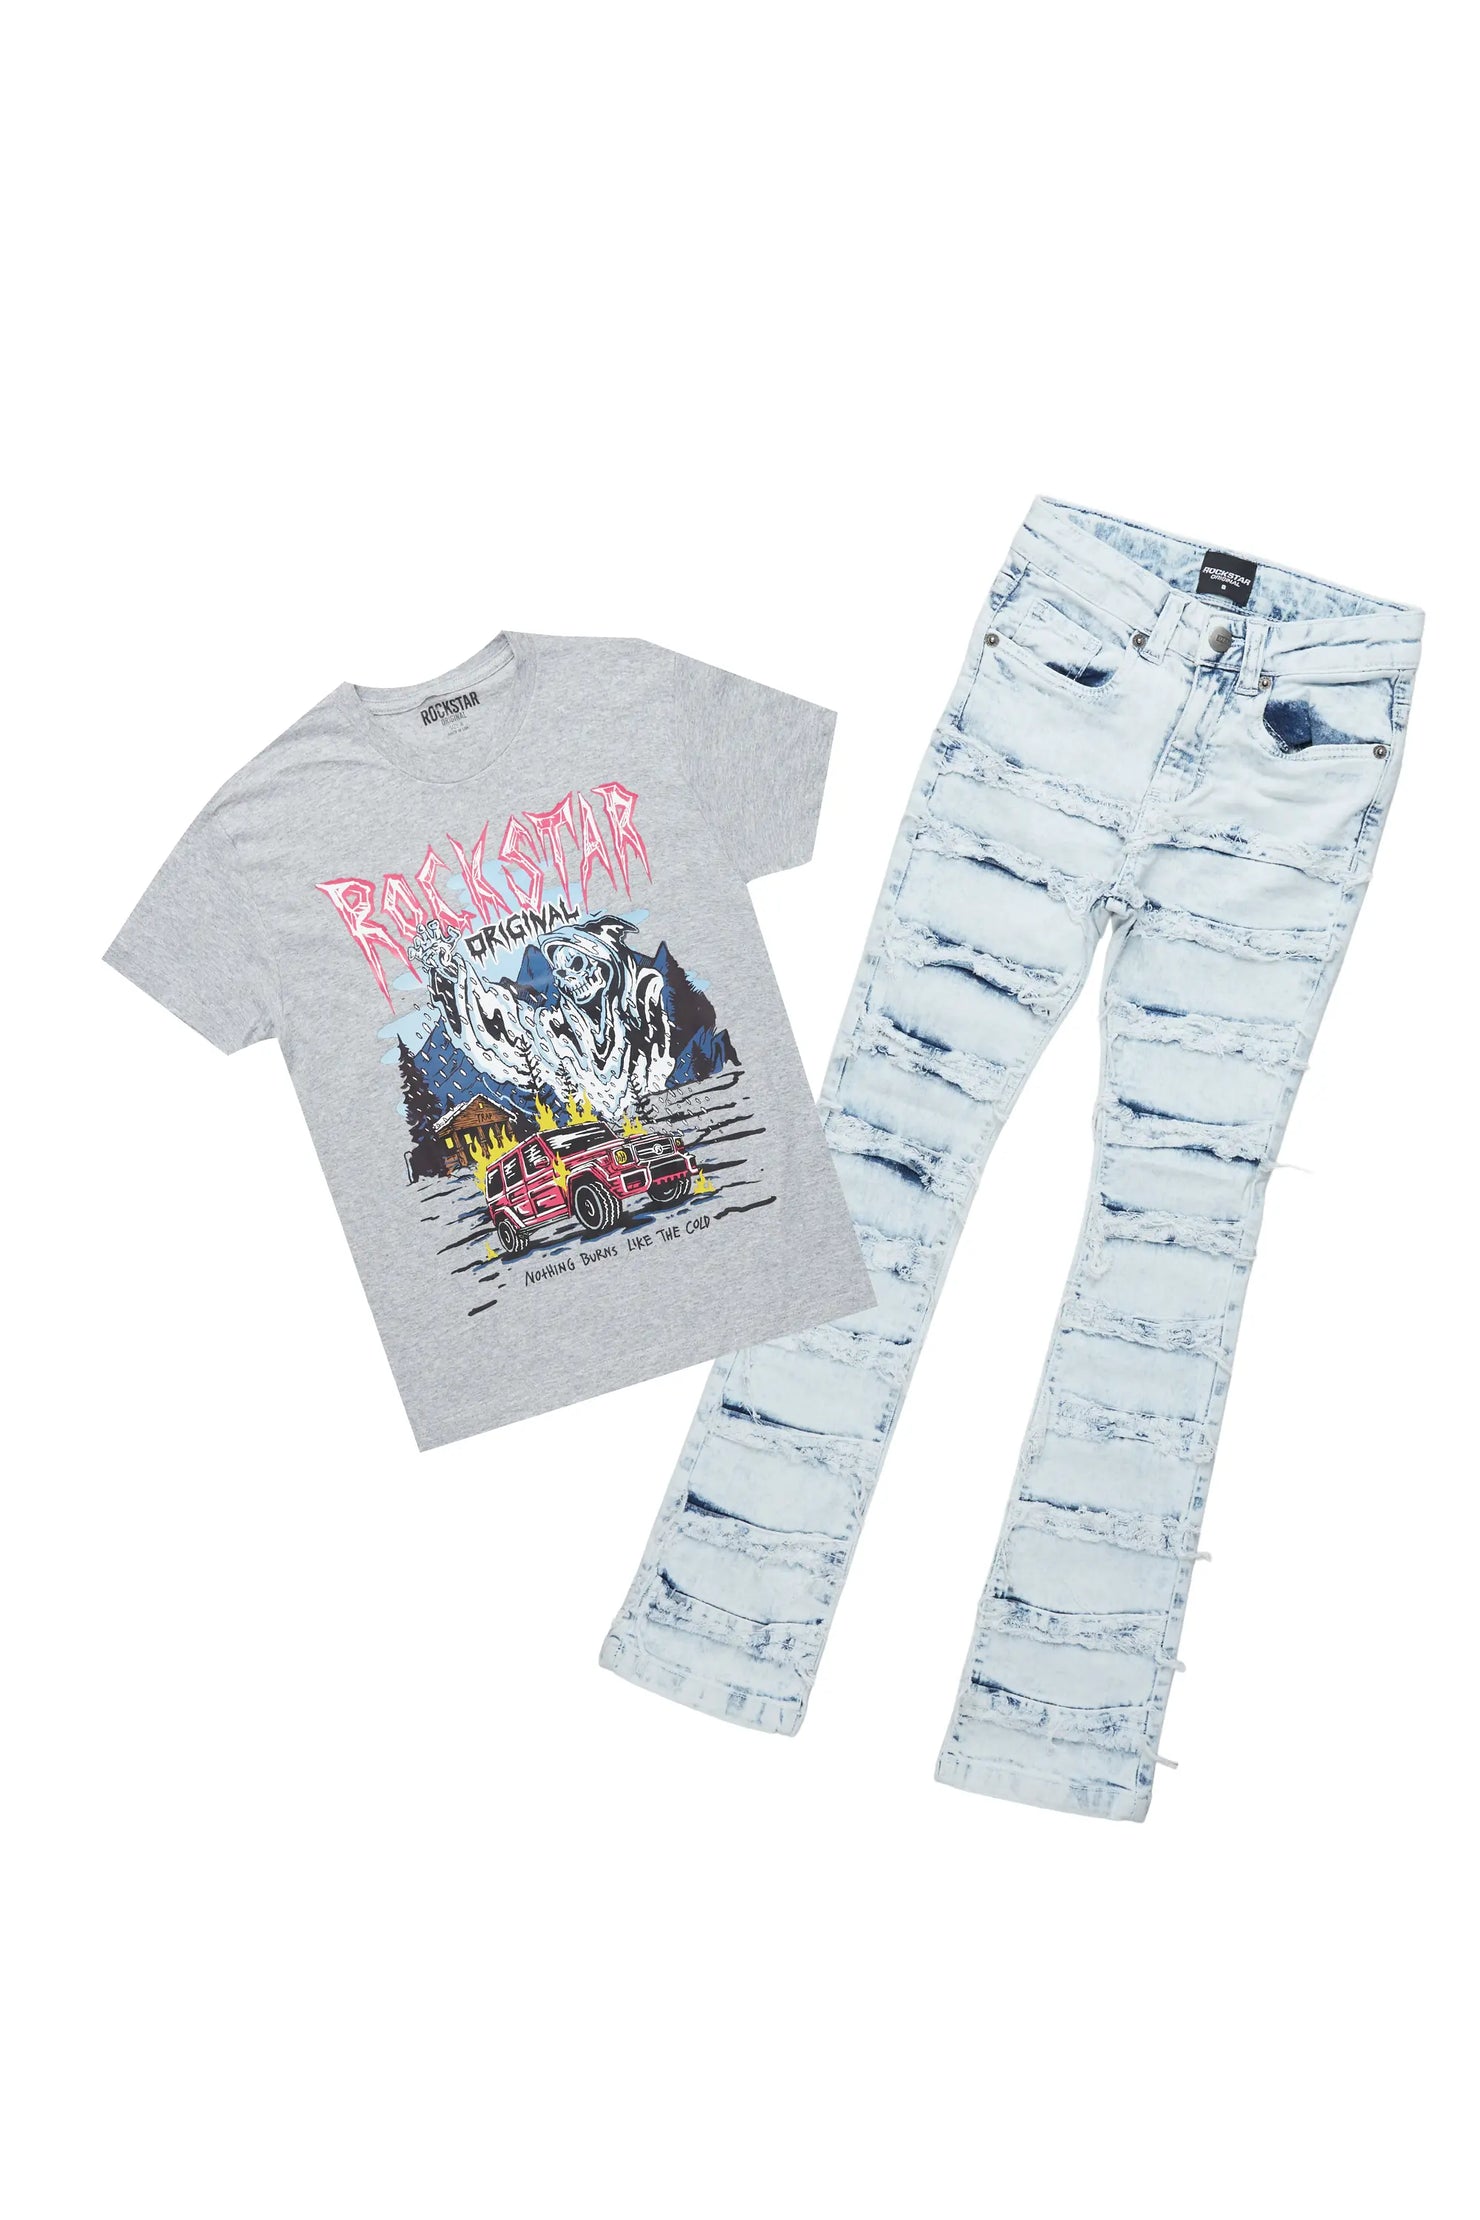 Boys Rakin Grey T-Shirt/Stacked Flare Jean Set